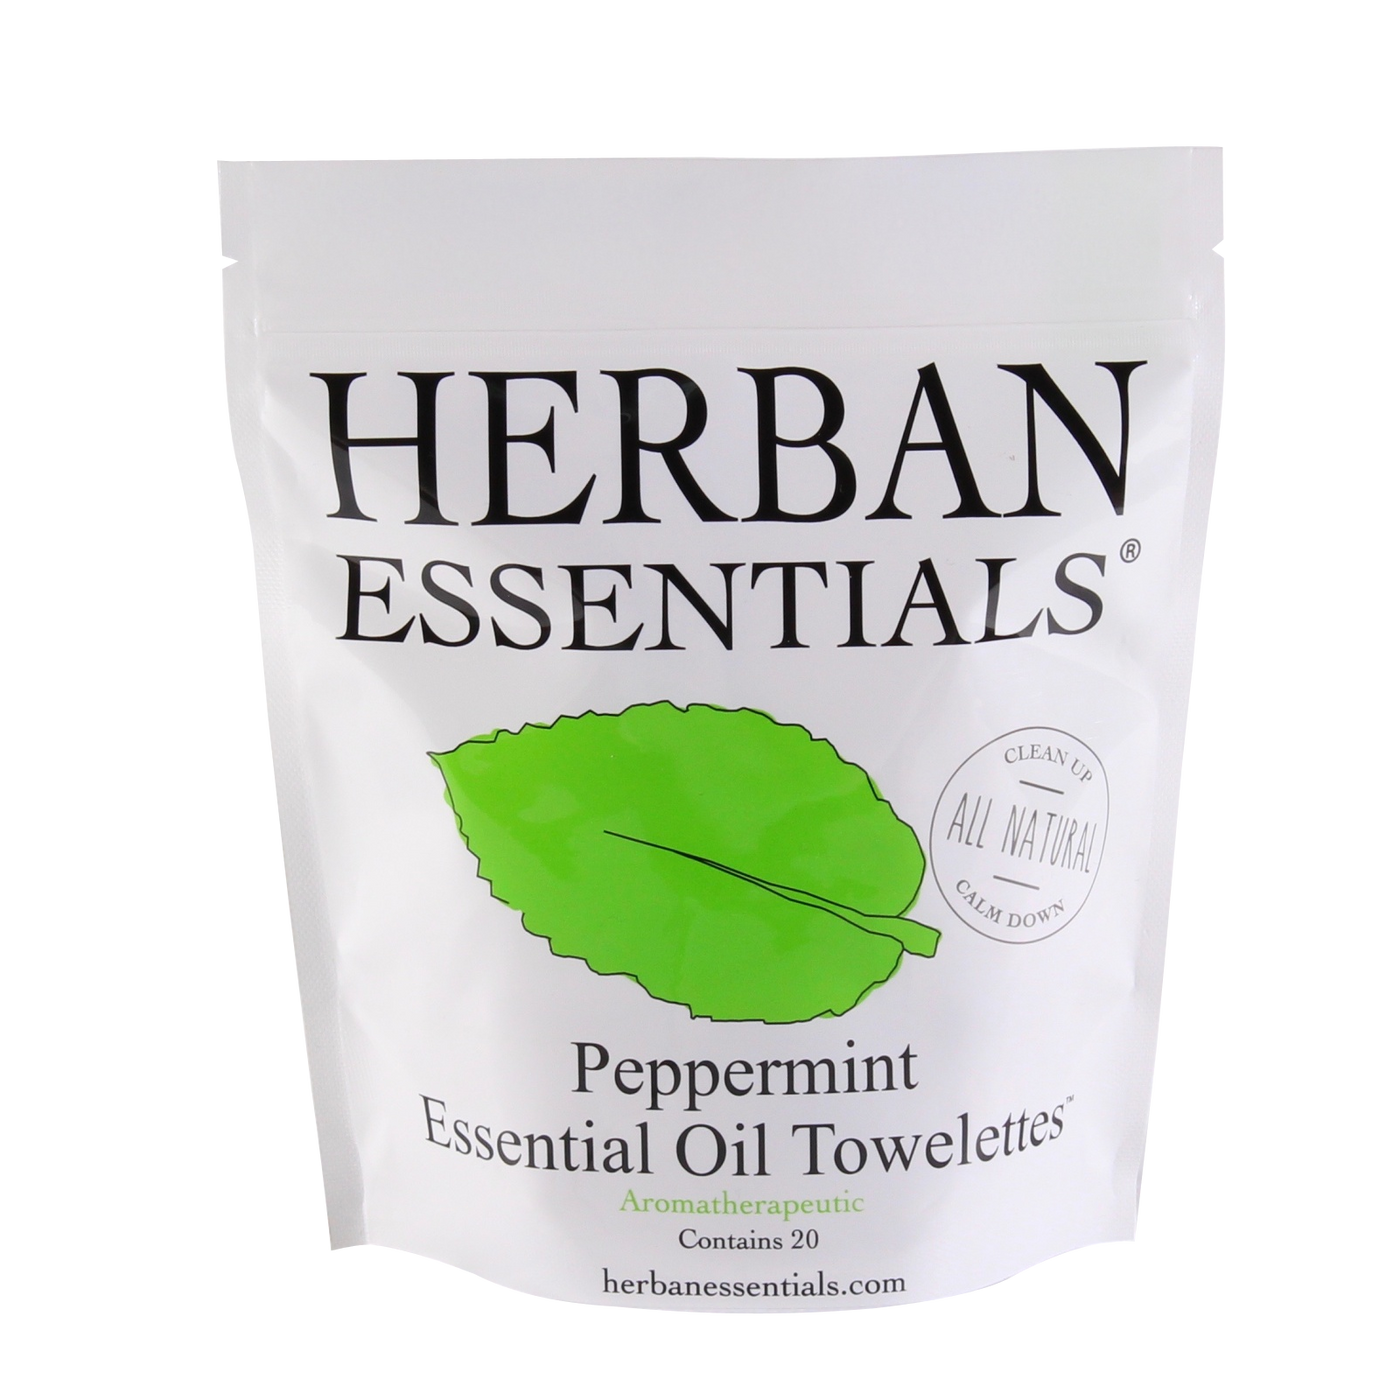 Herban Essential Oil Peppermint Wipes